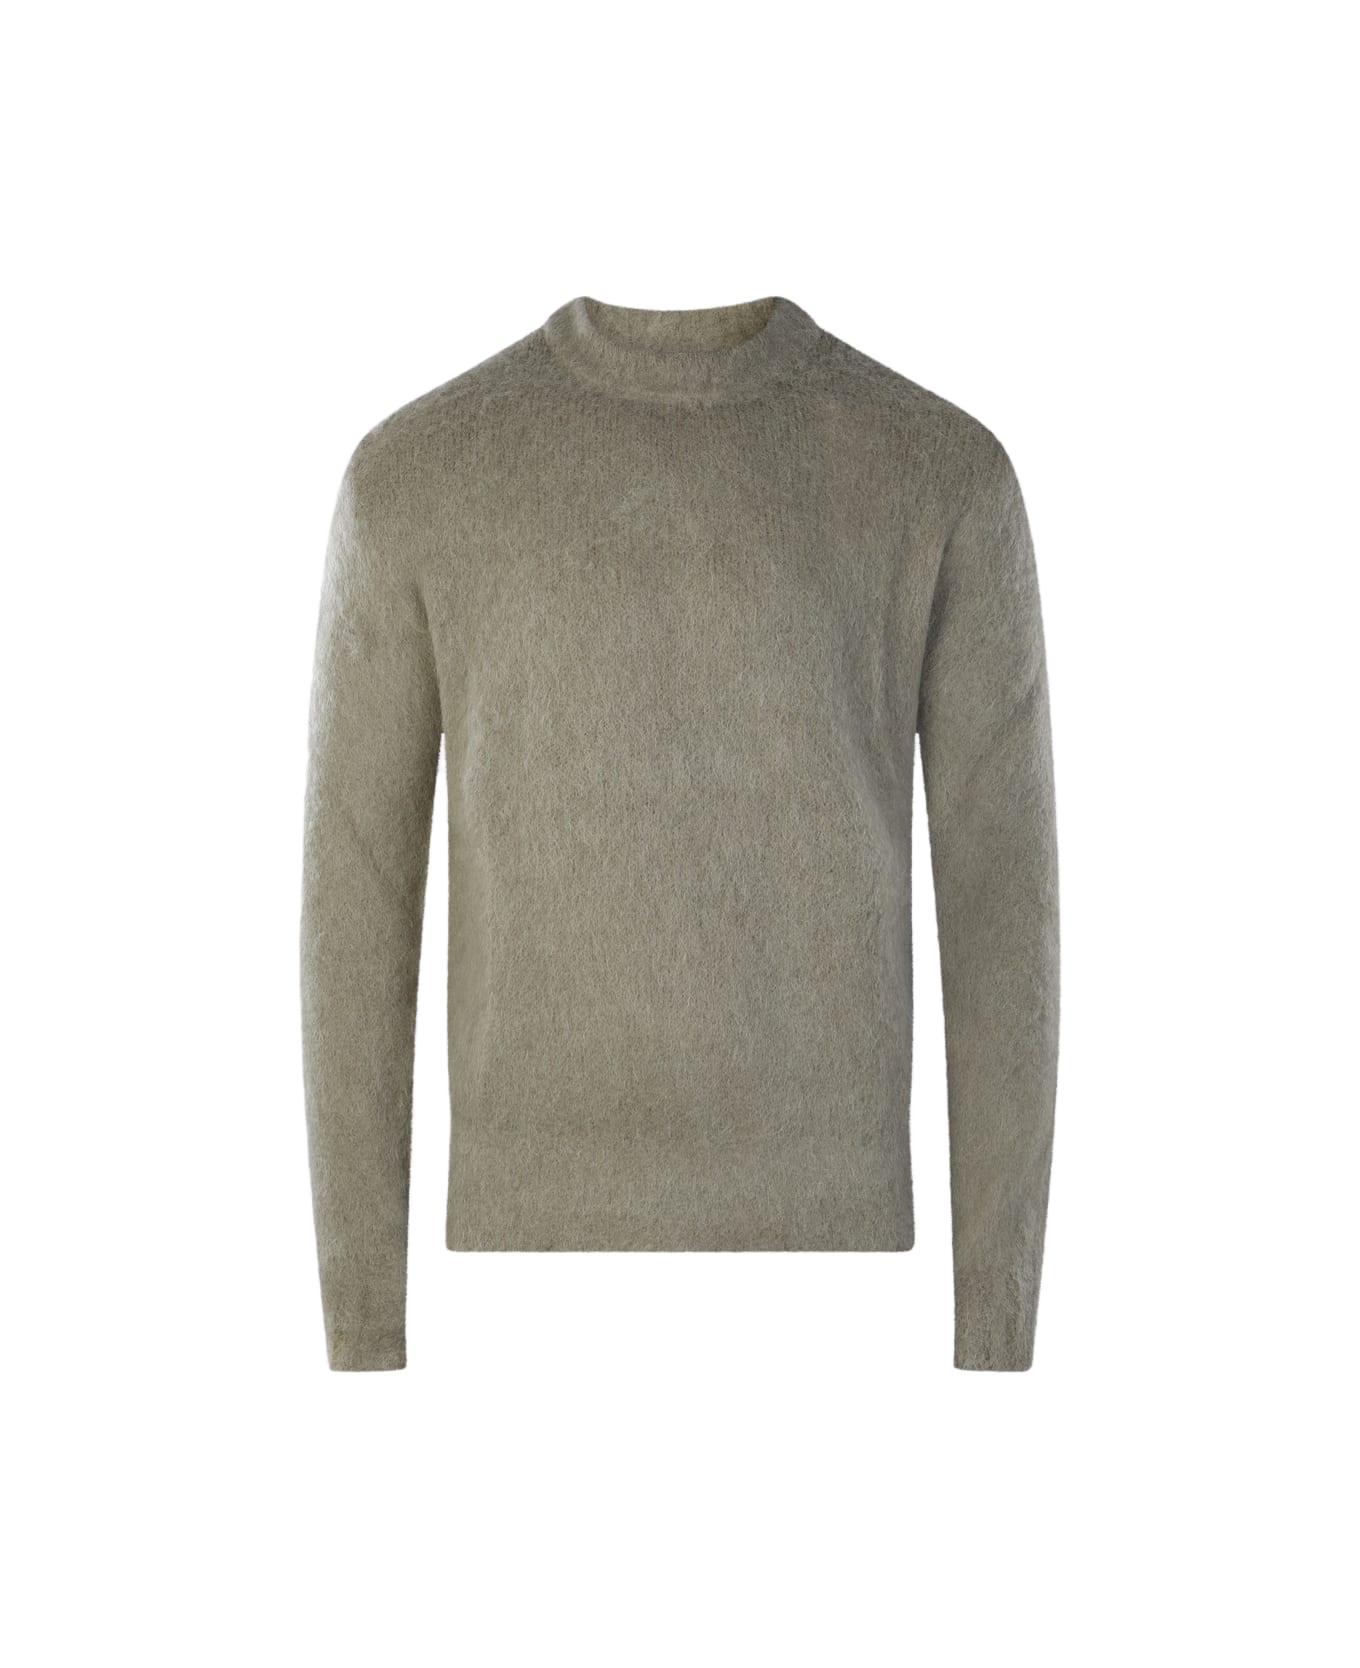 Ami Alexandre Mattiussi Taupe Mohari And Wool Blend Sweater - Beige